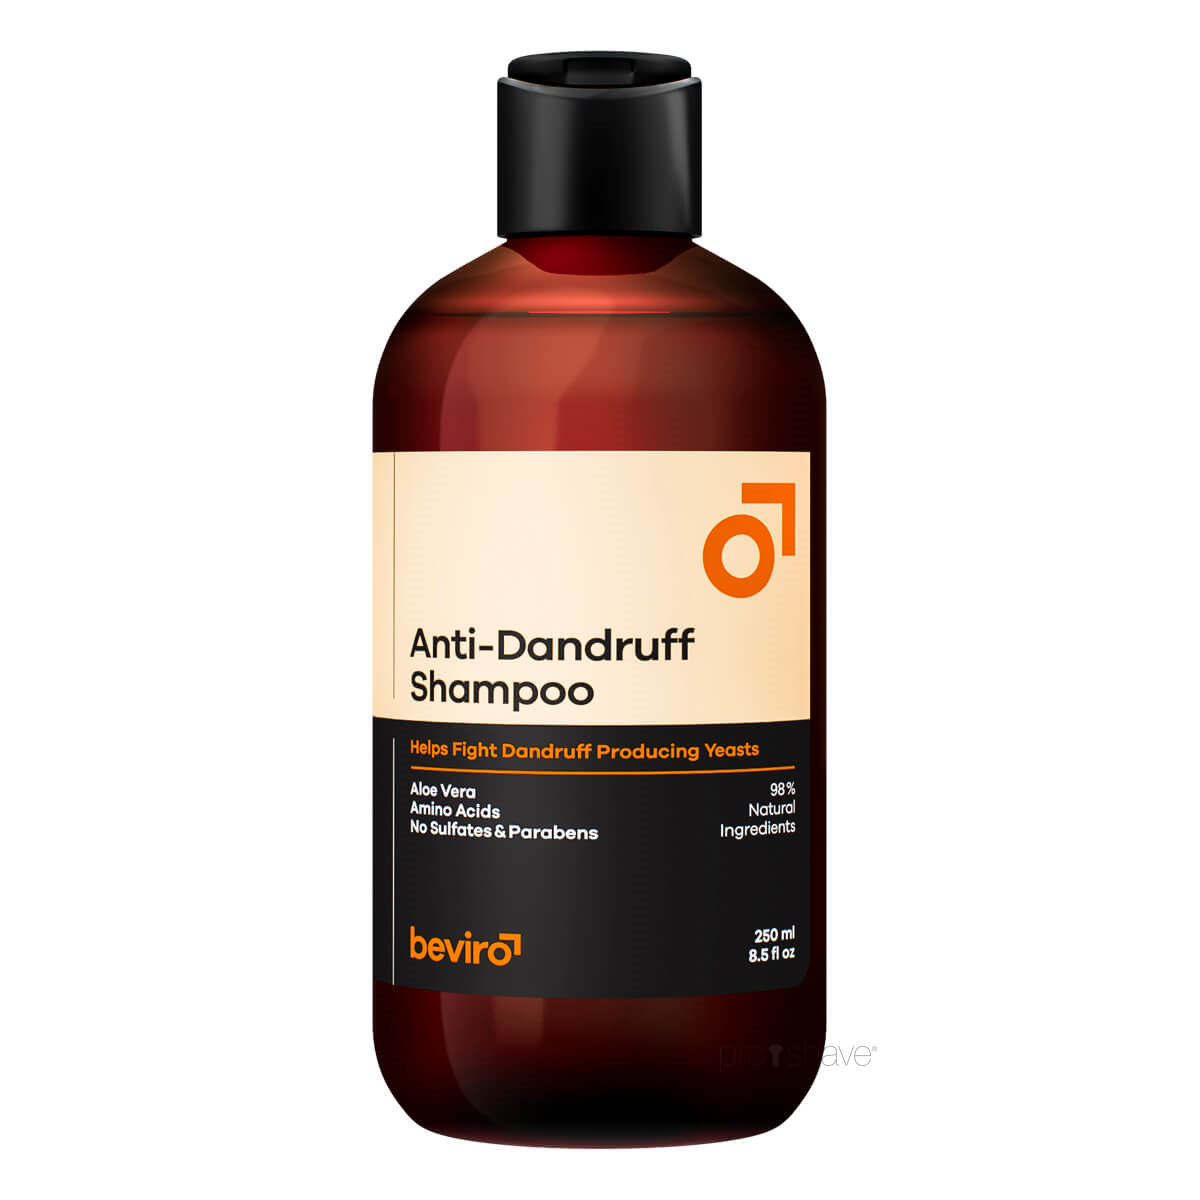 Billede af Beviro Anti-Dandruff Shampoo, 250 ml.